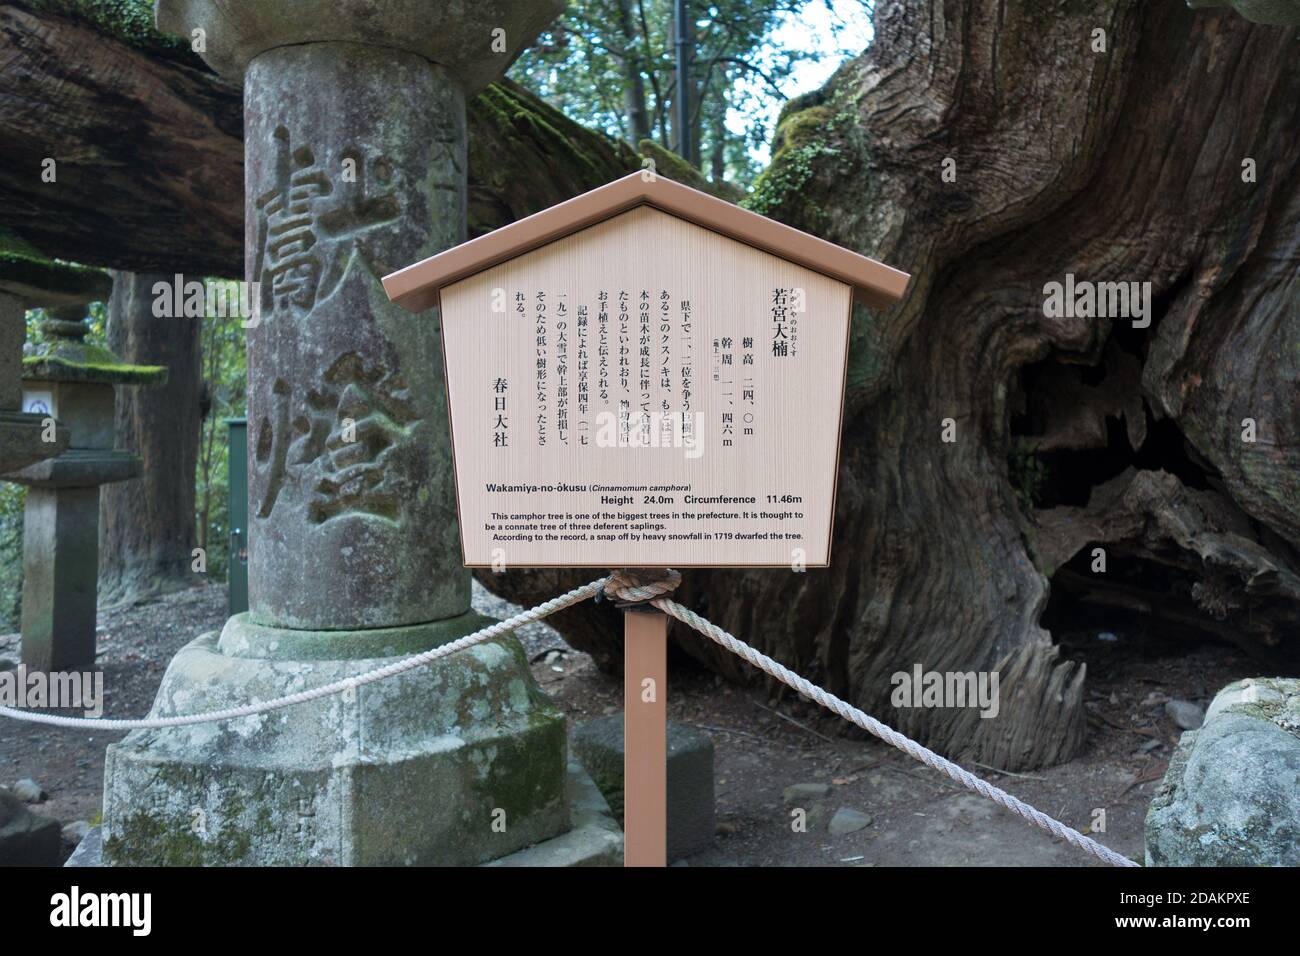 A sign for the Wakamiya-no-okusu camphor tree in Nara, Japan. Stock Photo